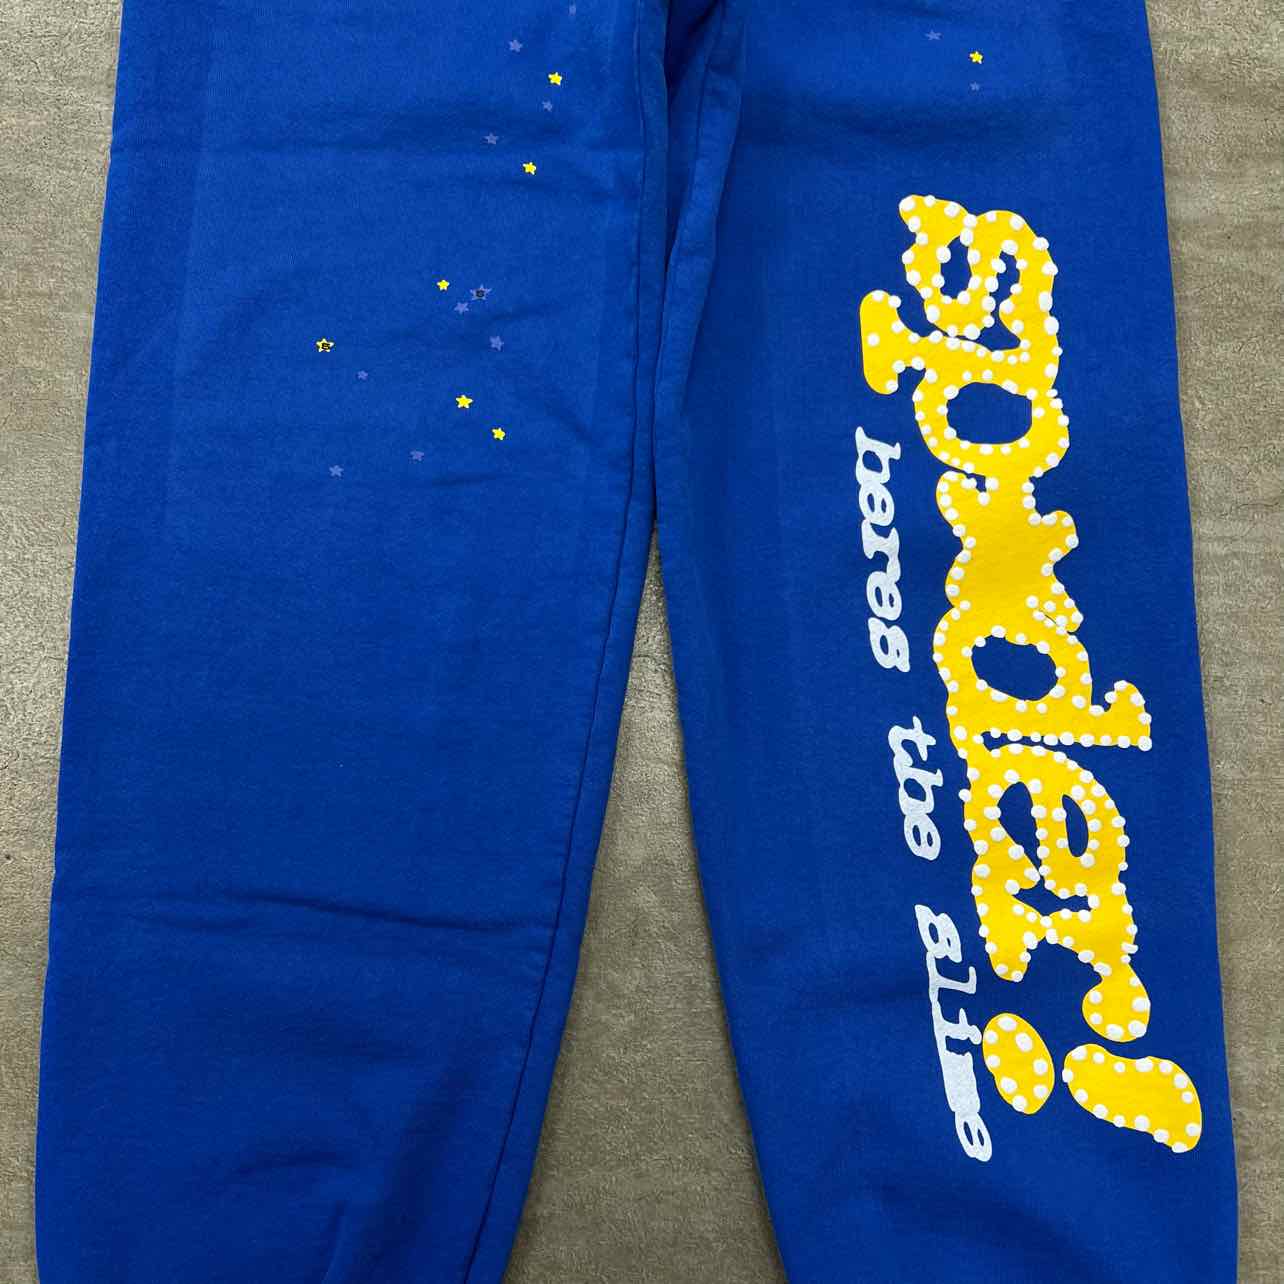 Sp5der Sweatpants "MARINA BLUE" Blue New Size L